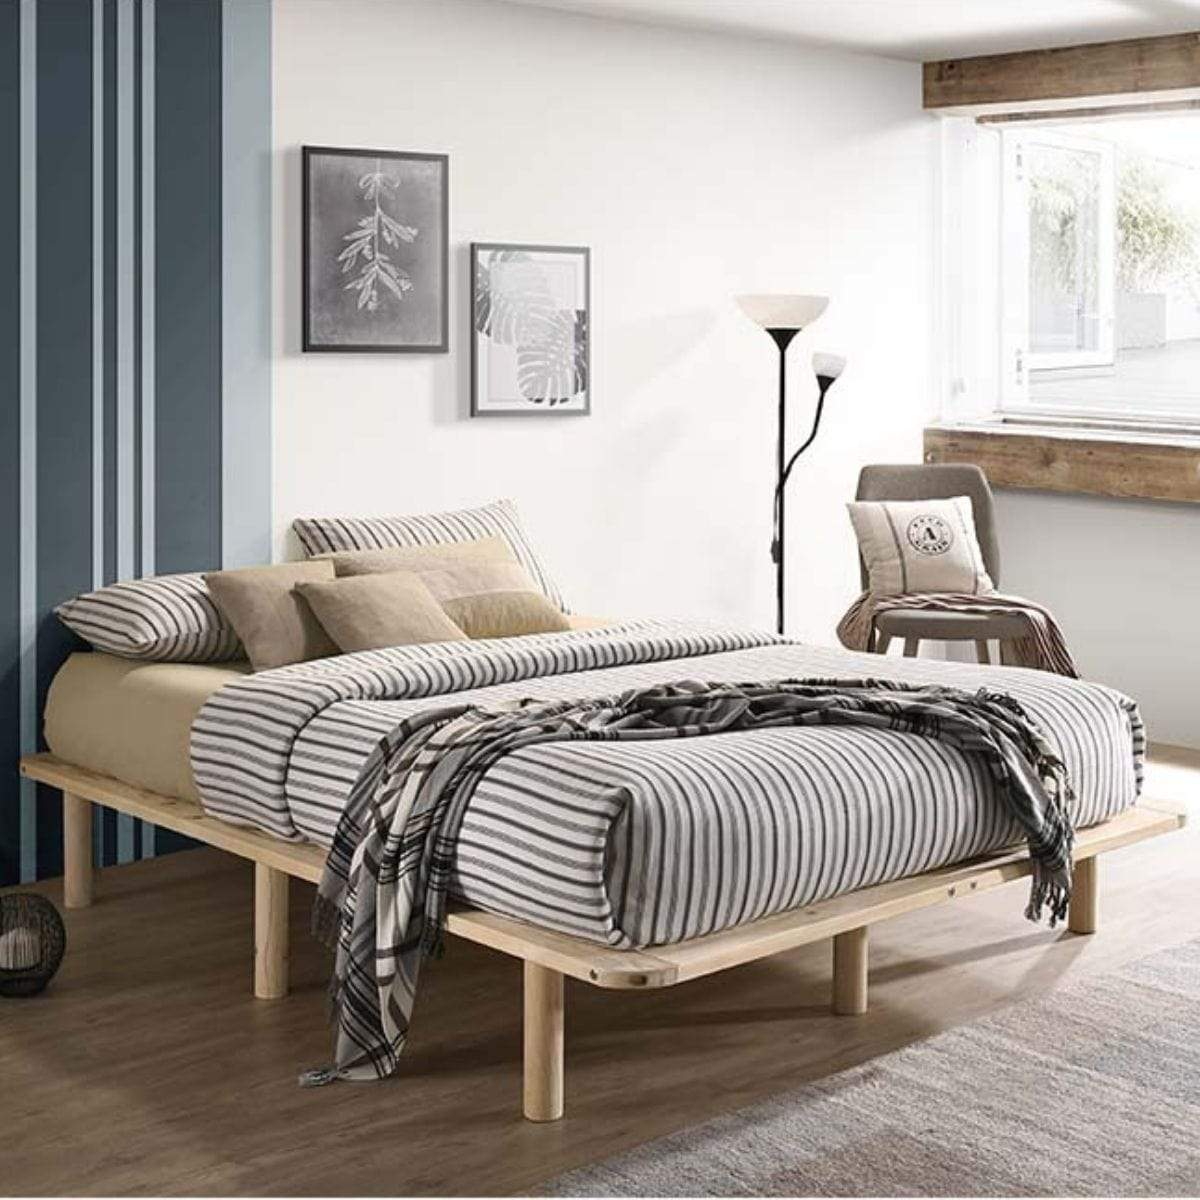 Platform Bed Base Frame Wooden Natural King Single Pinewood - Newstart Furniture